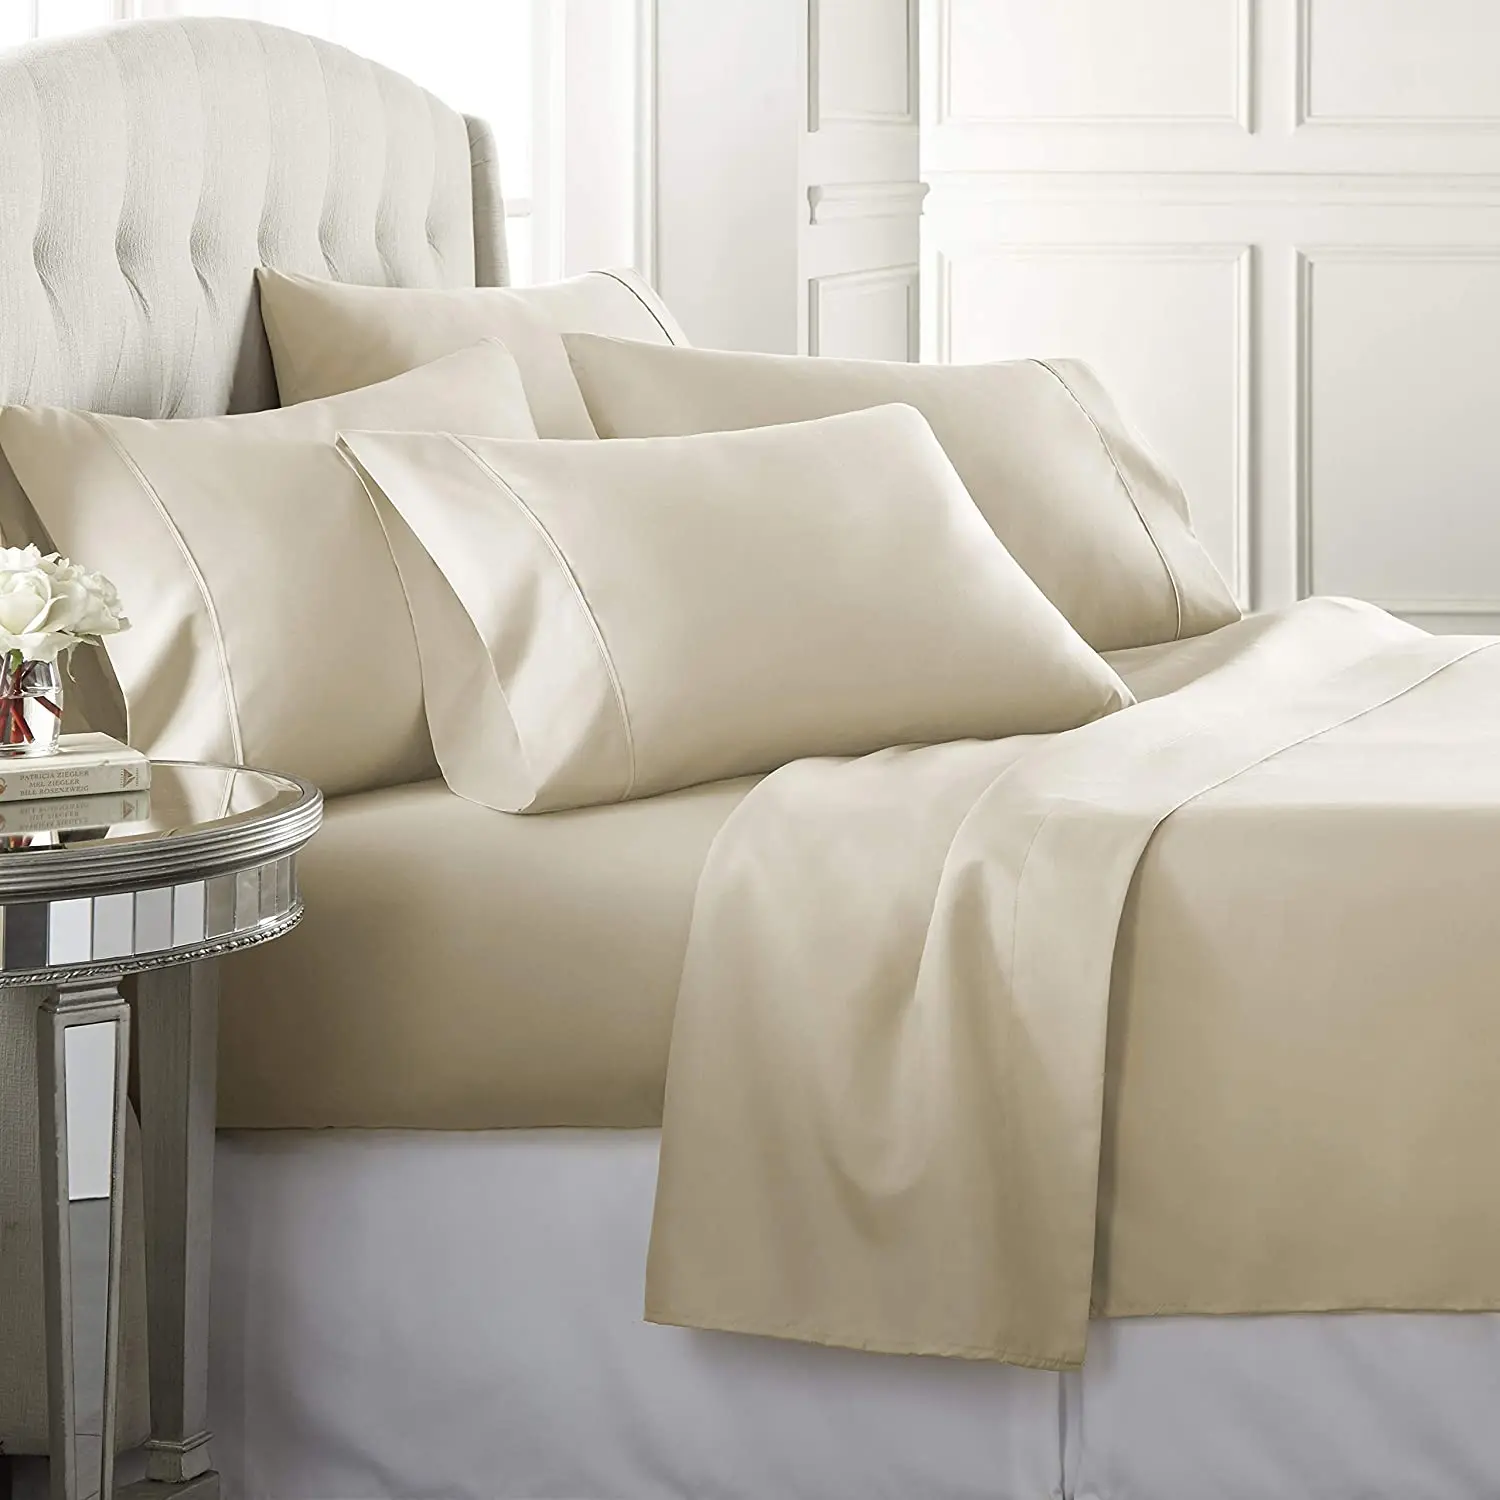 4 Piece Premium Bed Sheets Set Hypoallergenic Wrinkle Fade Resistant Bedding Set 